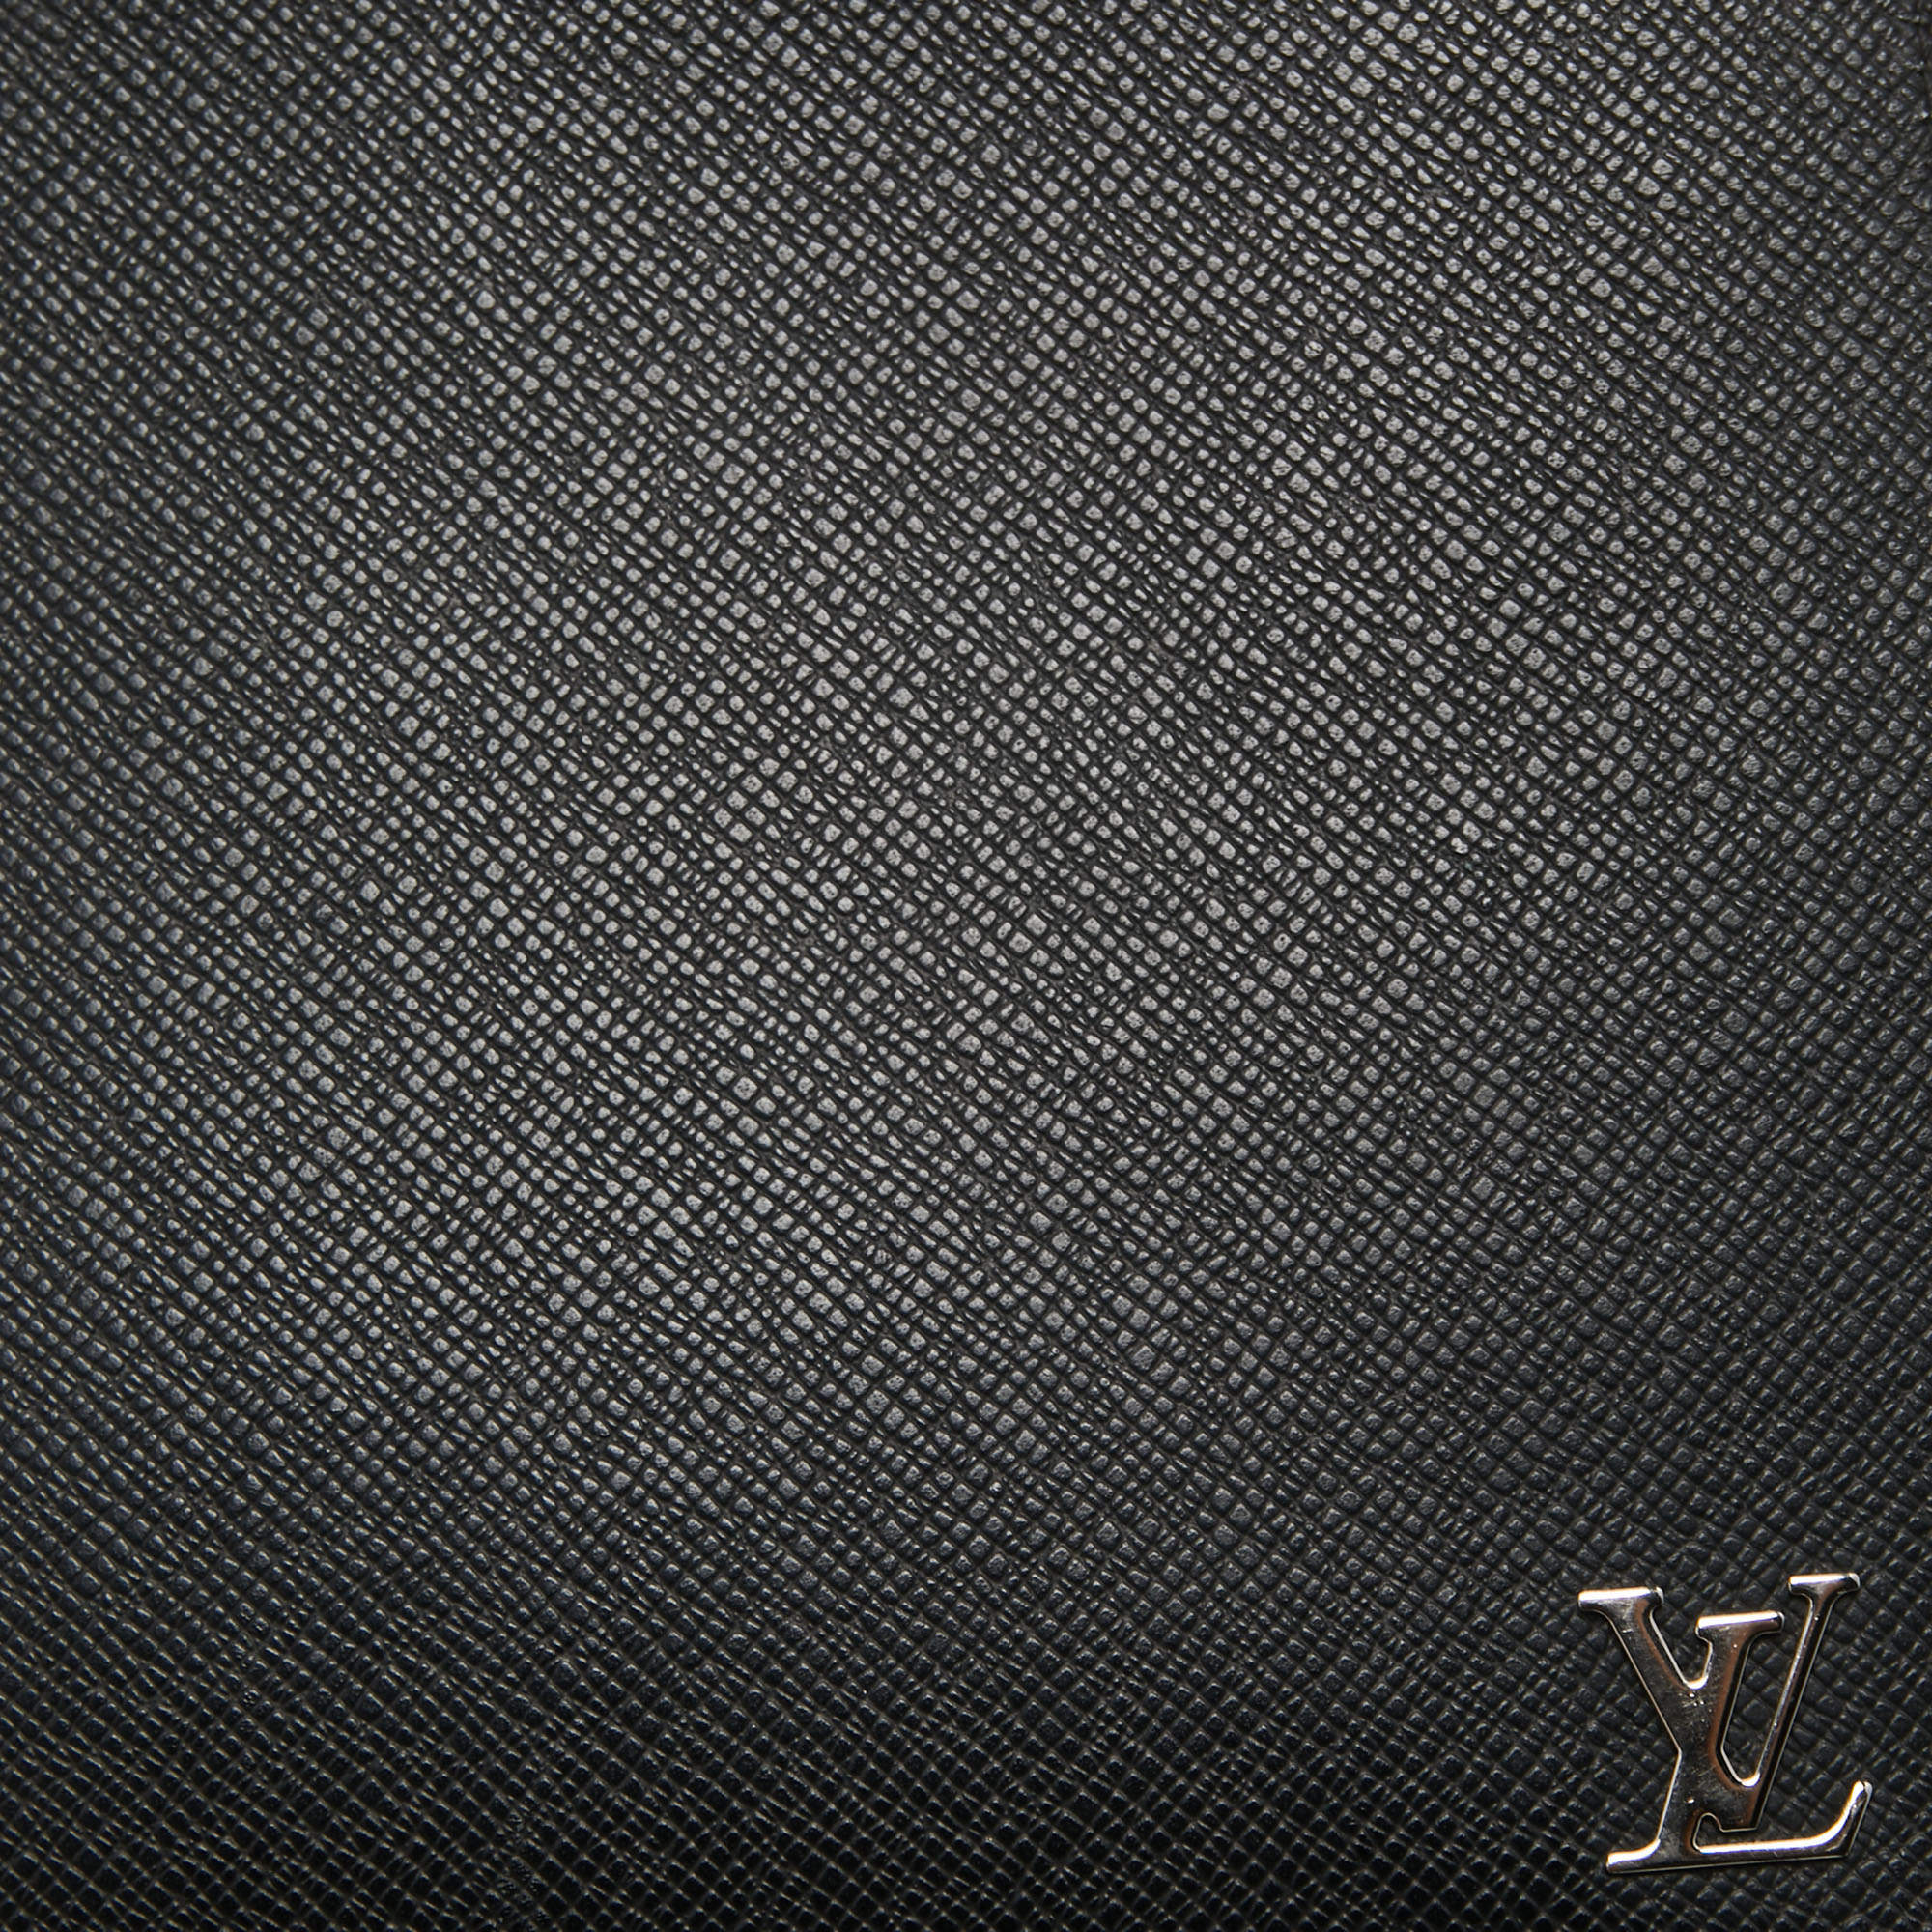 Shop Louis Vuitton TAIGA 2021-22FW Pochette Voyage (M30450) by SkyNS